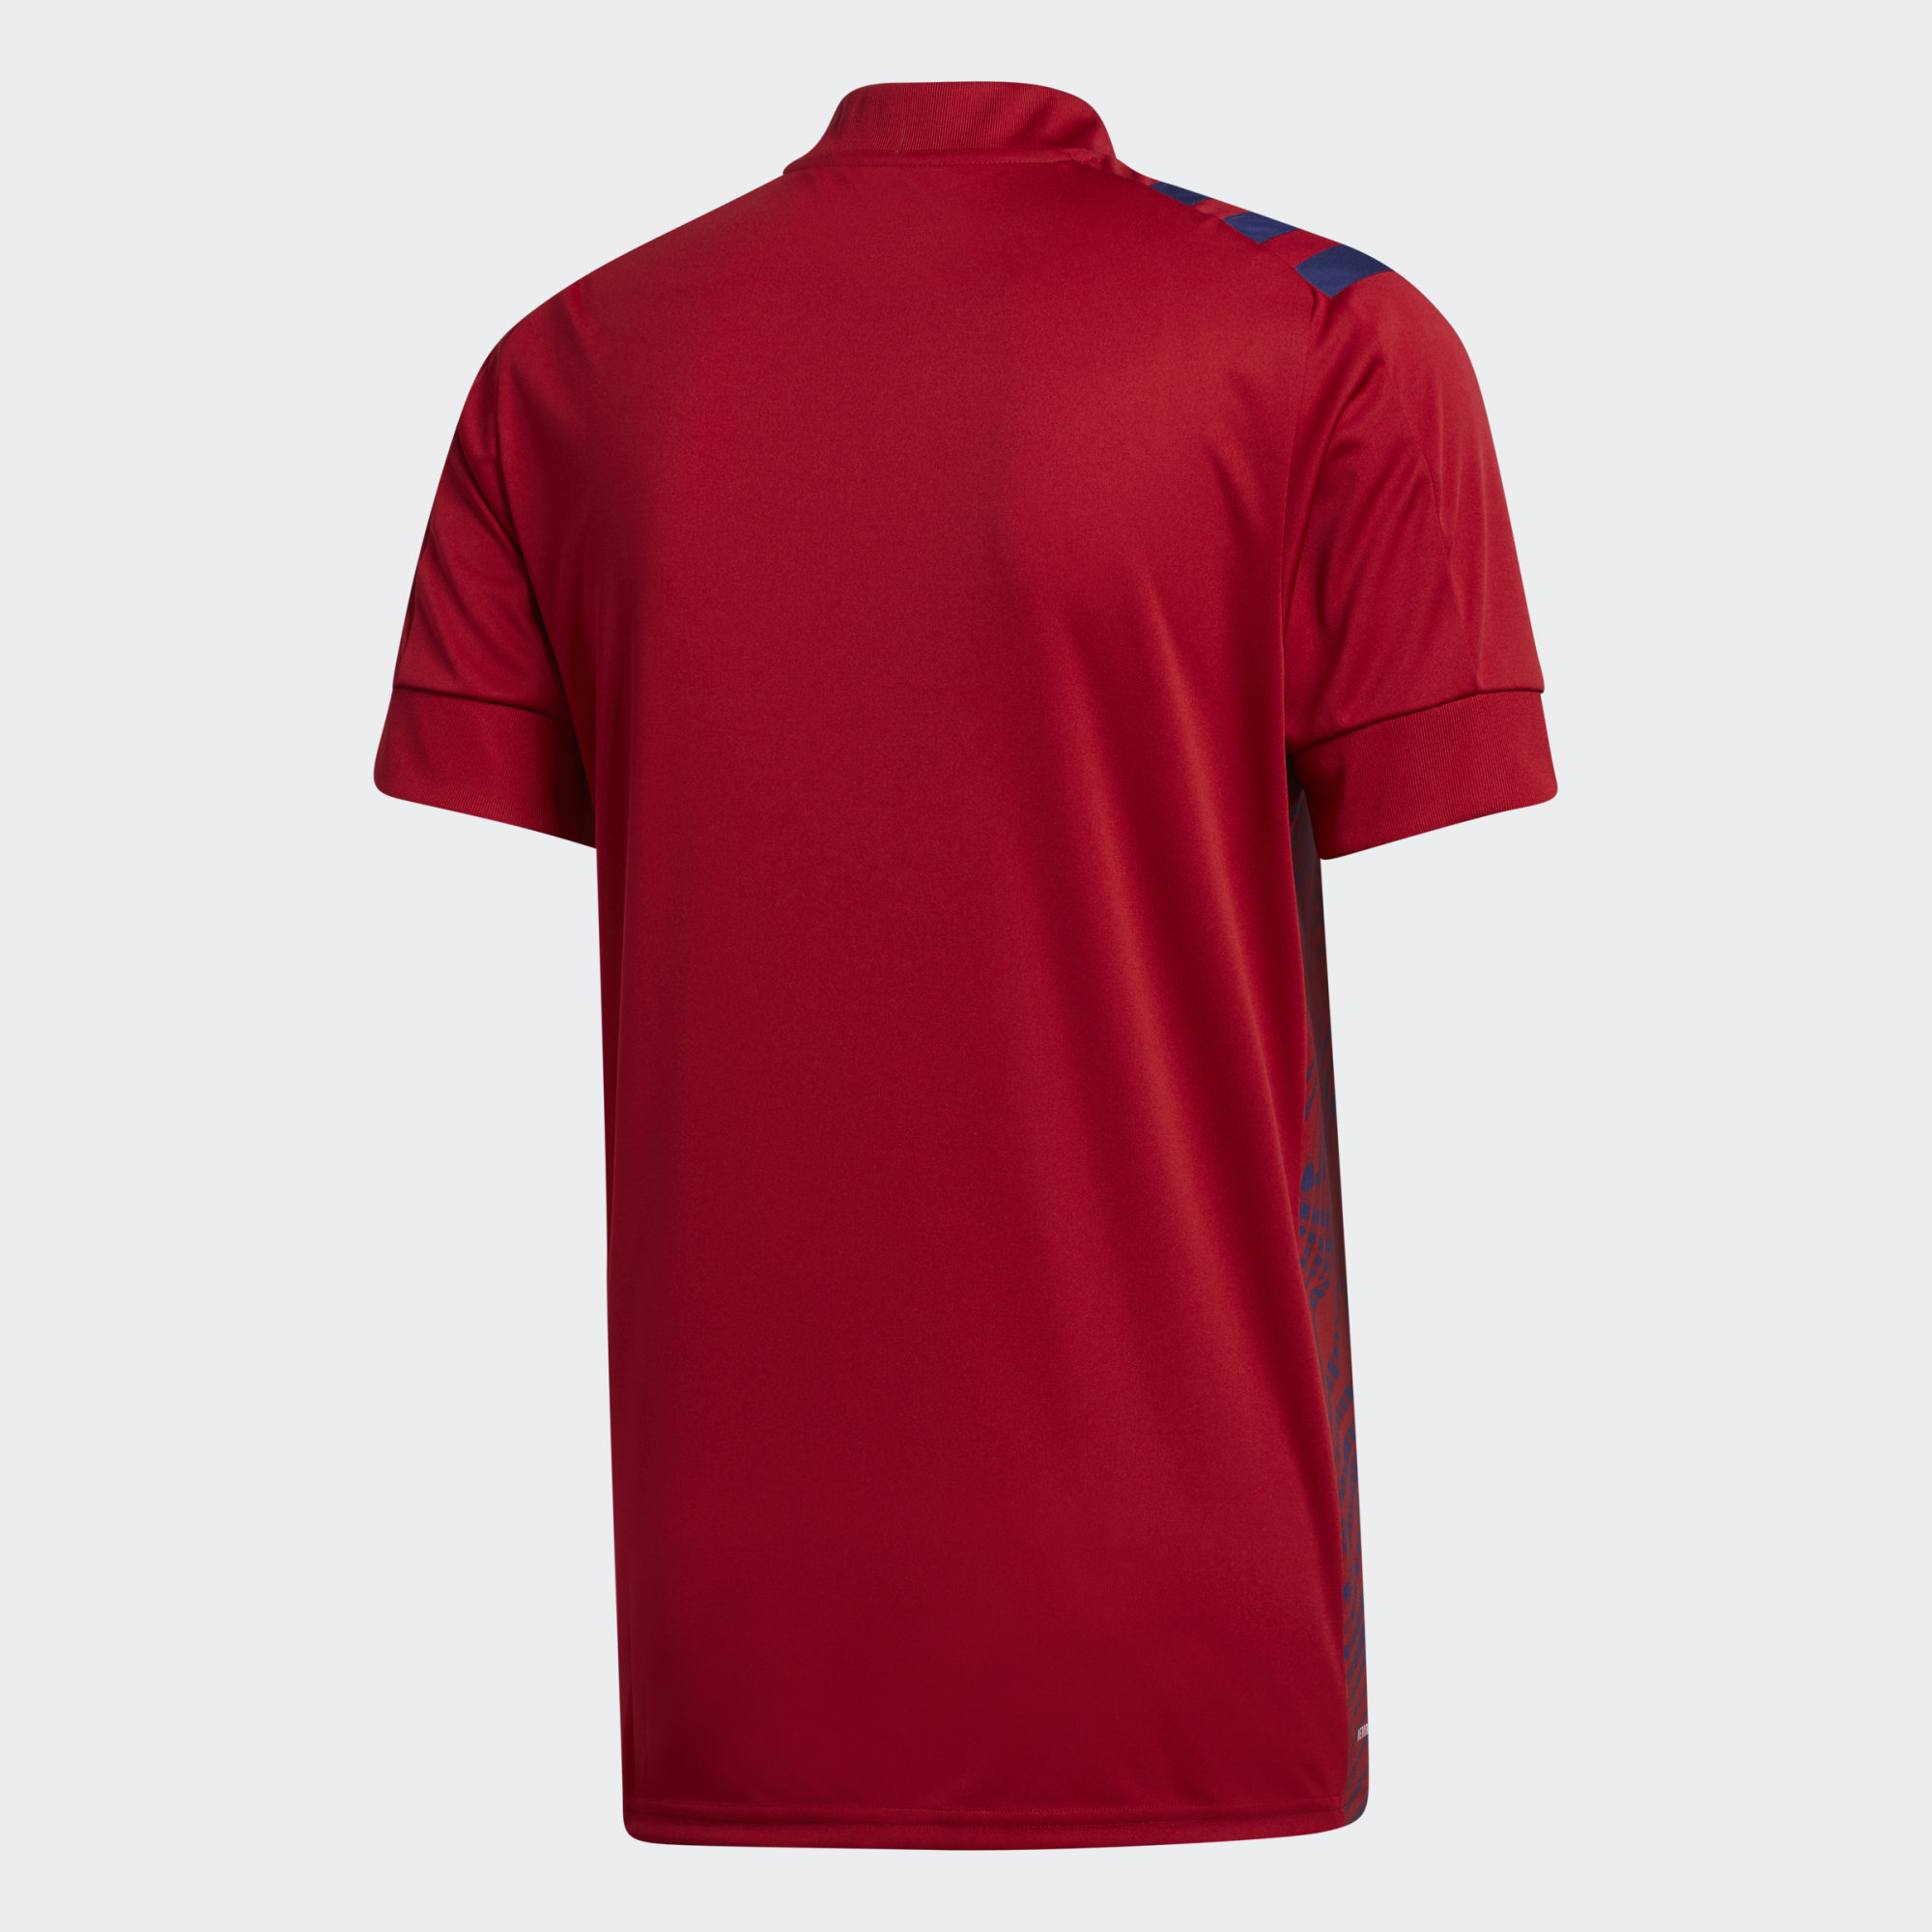 Real Salt Lake 2020-21 Adidas Home Kit - Football Shirt Culture ...